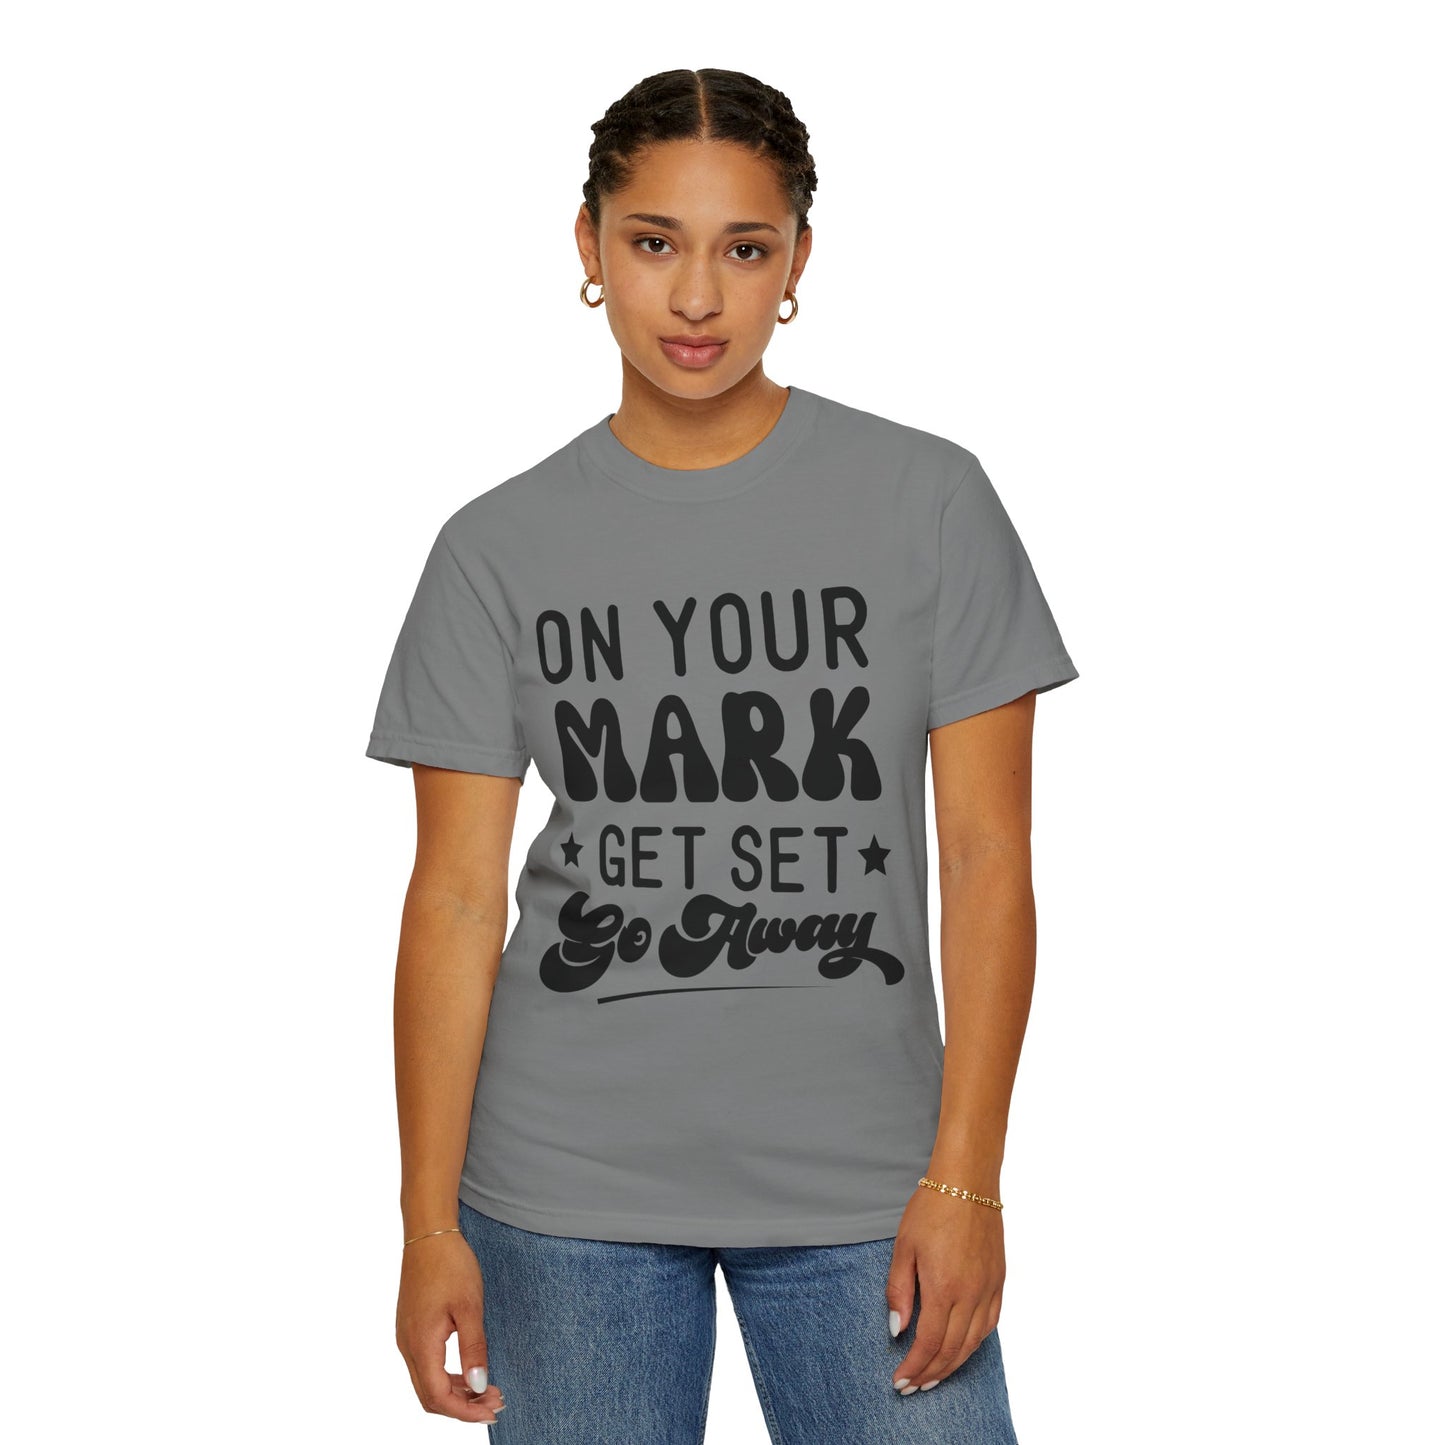 On your mark, get set, go away - Unisex Garment-Dyed T-shirt